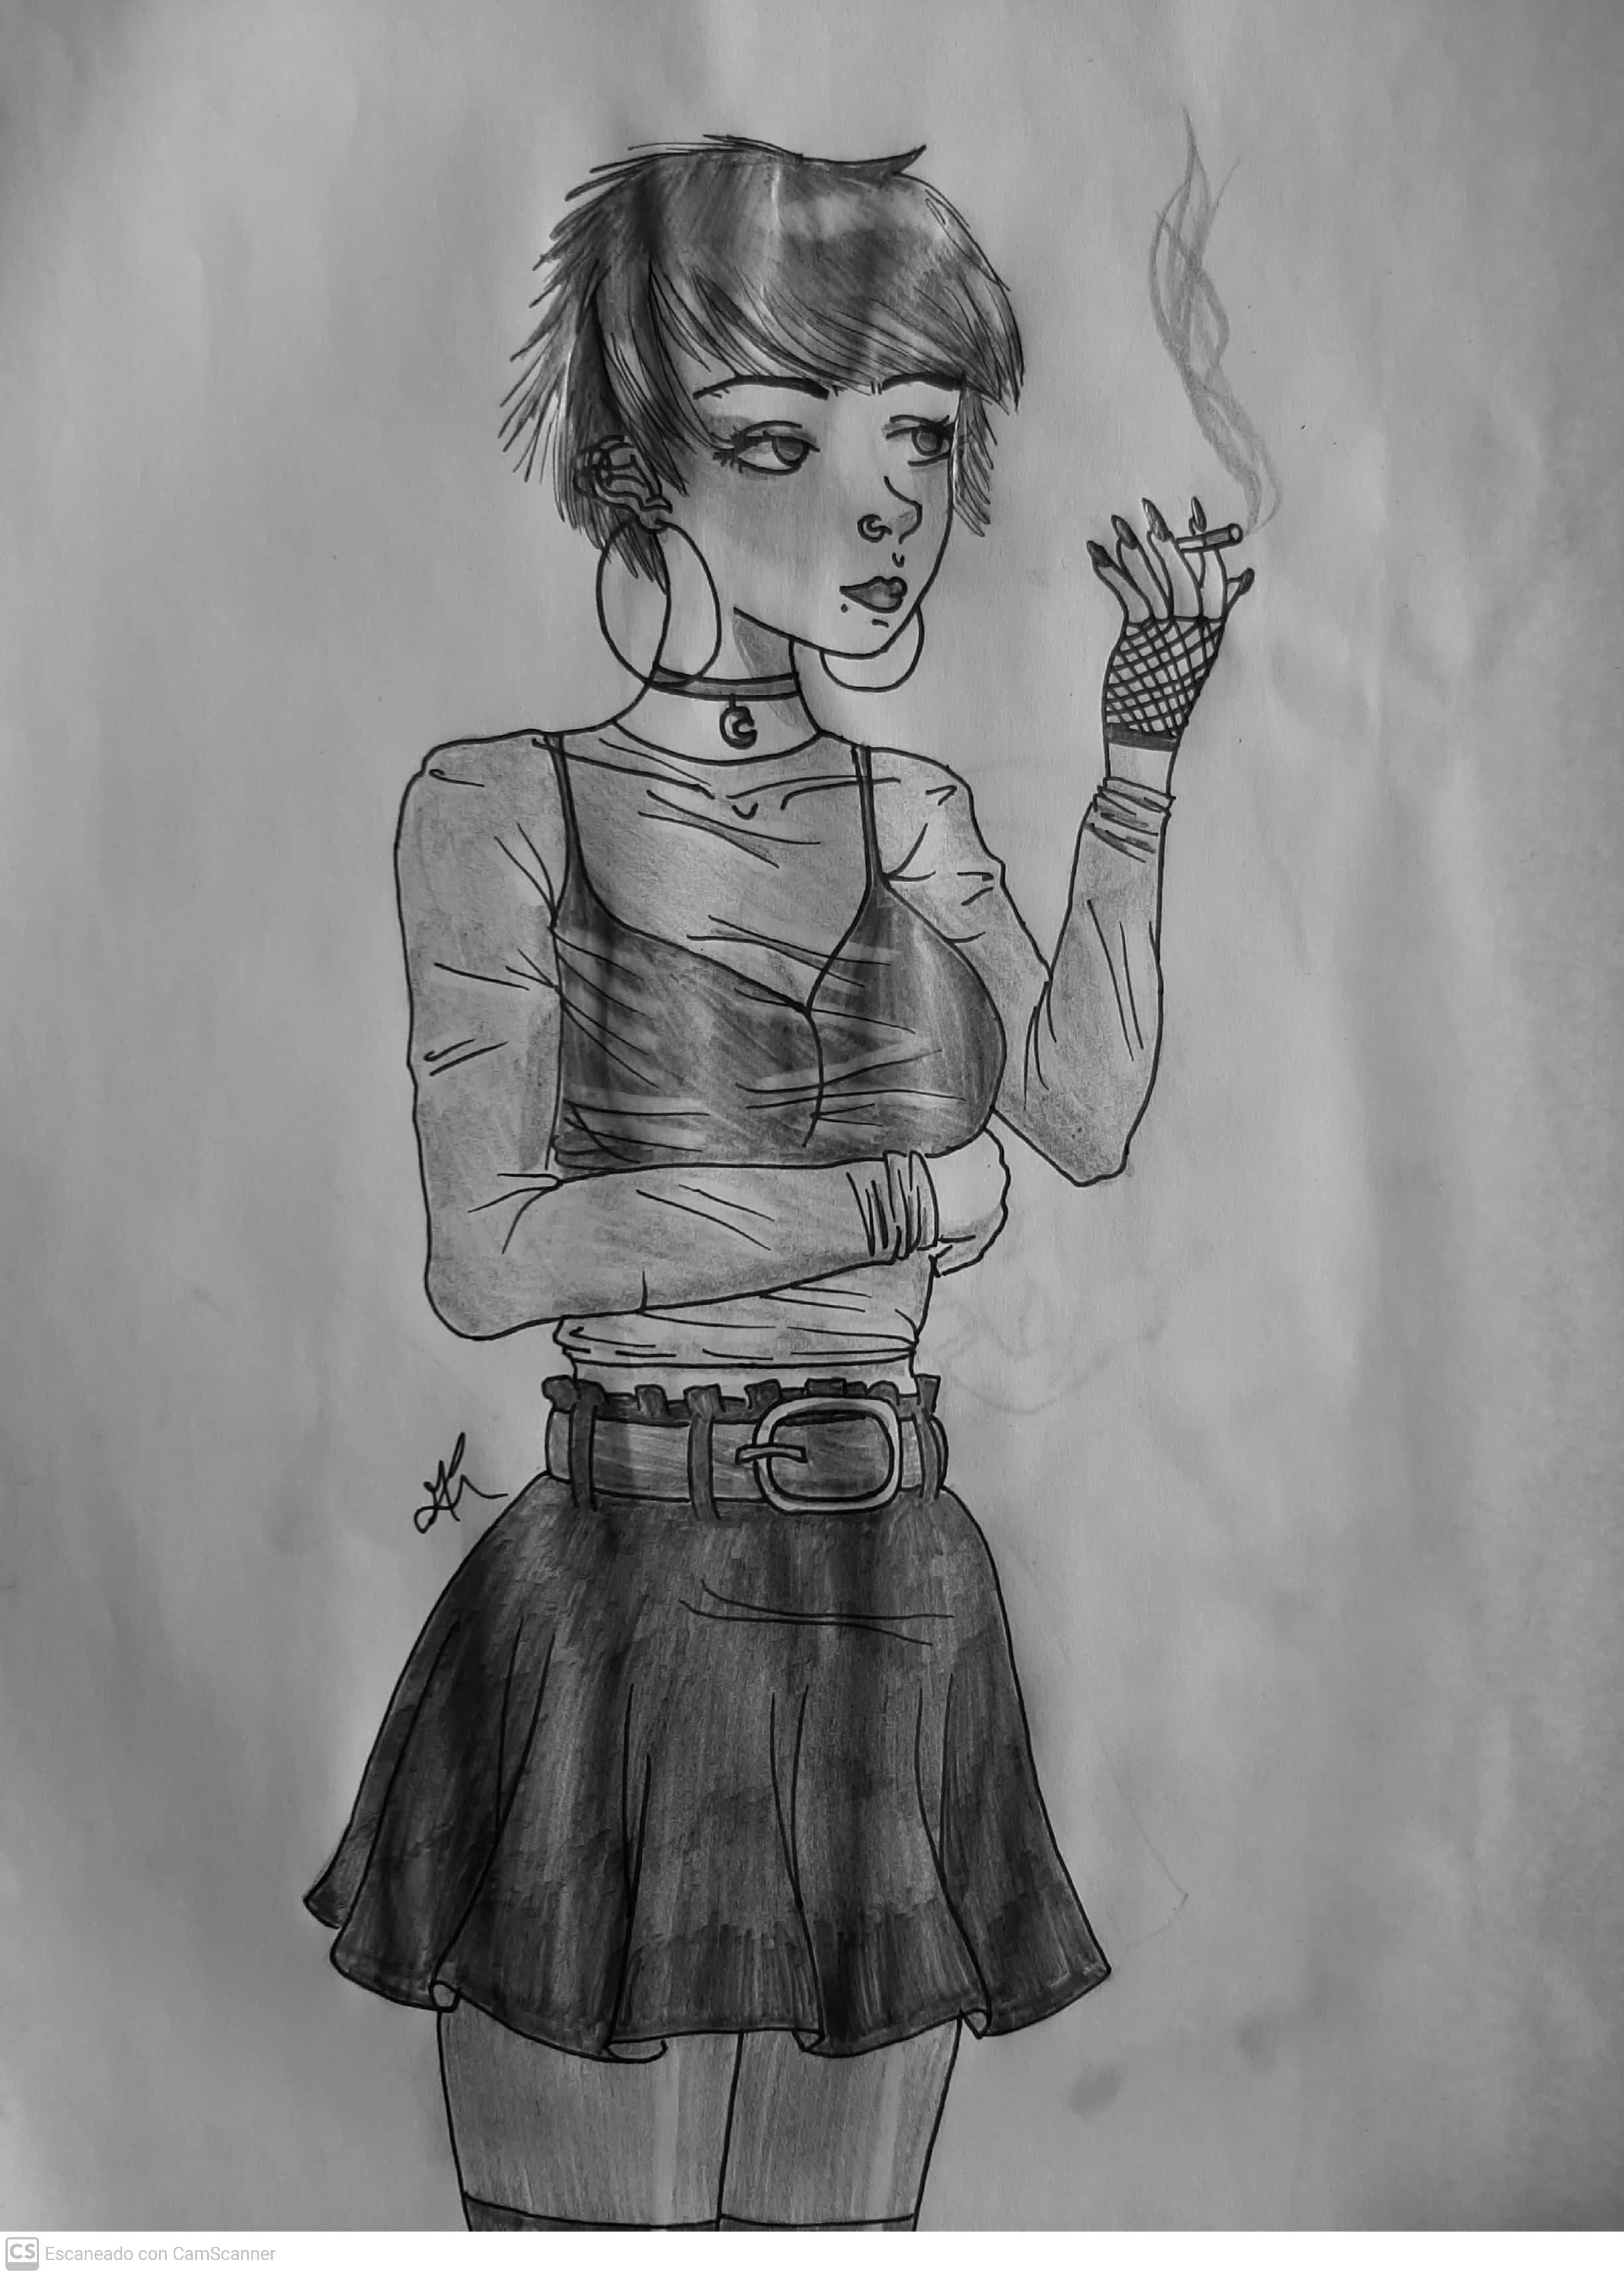 Dibujo tradicional de una chica fumando un cigarrillo